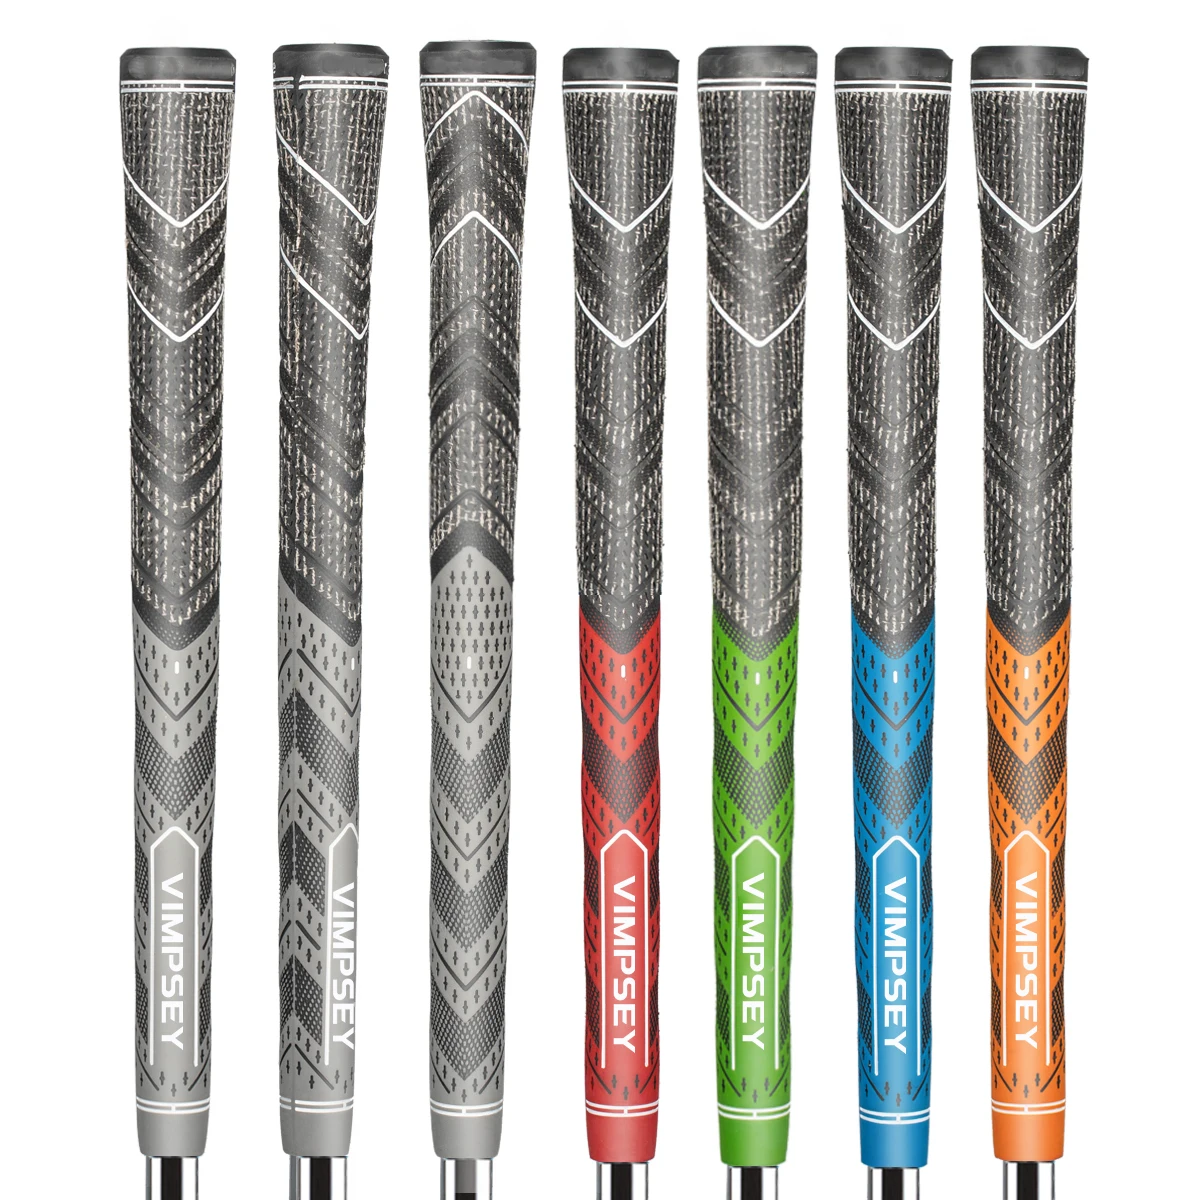 

10 Pcs/Set Golf Grips multi-compound Rubber Cotton Standard/Midsize Irons/Woods Universal Golf Club Grip